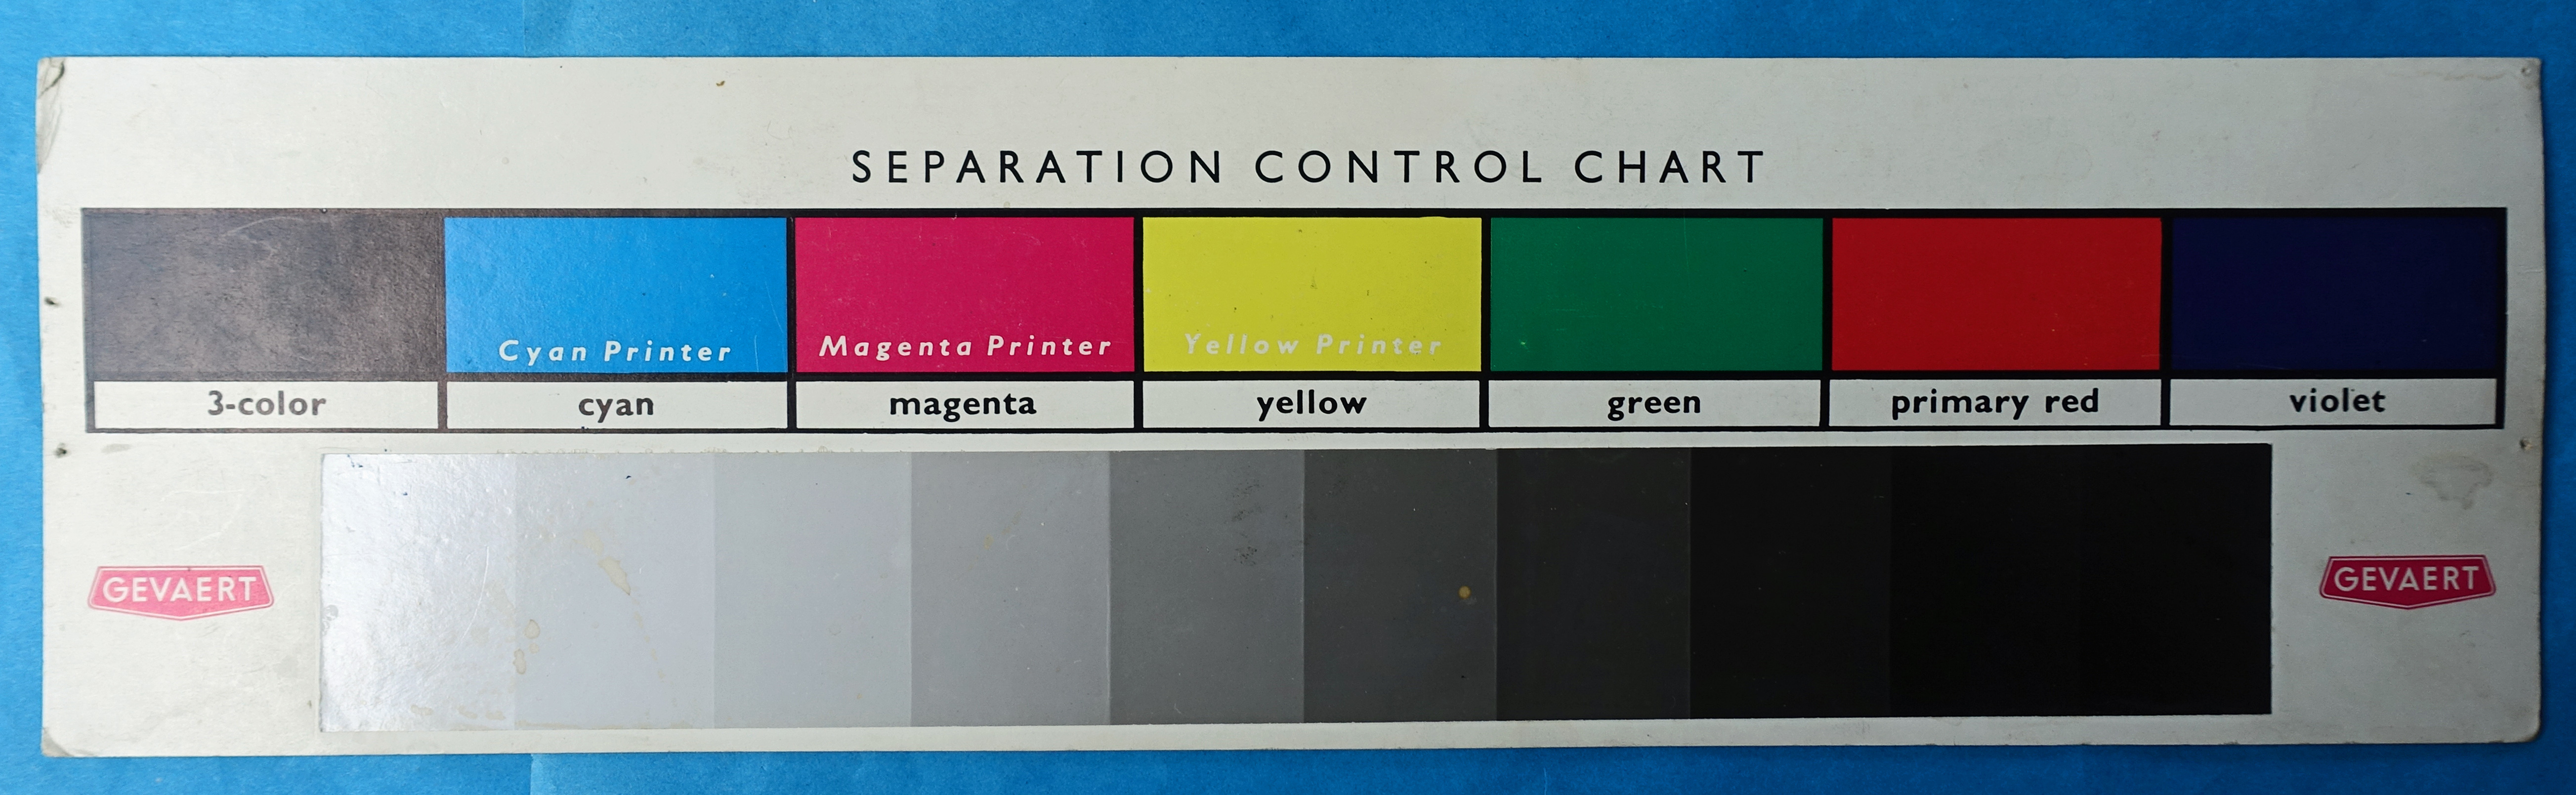 Unknown 1246 Gevaert Separation Control Chart Colour Separation